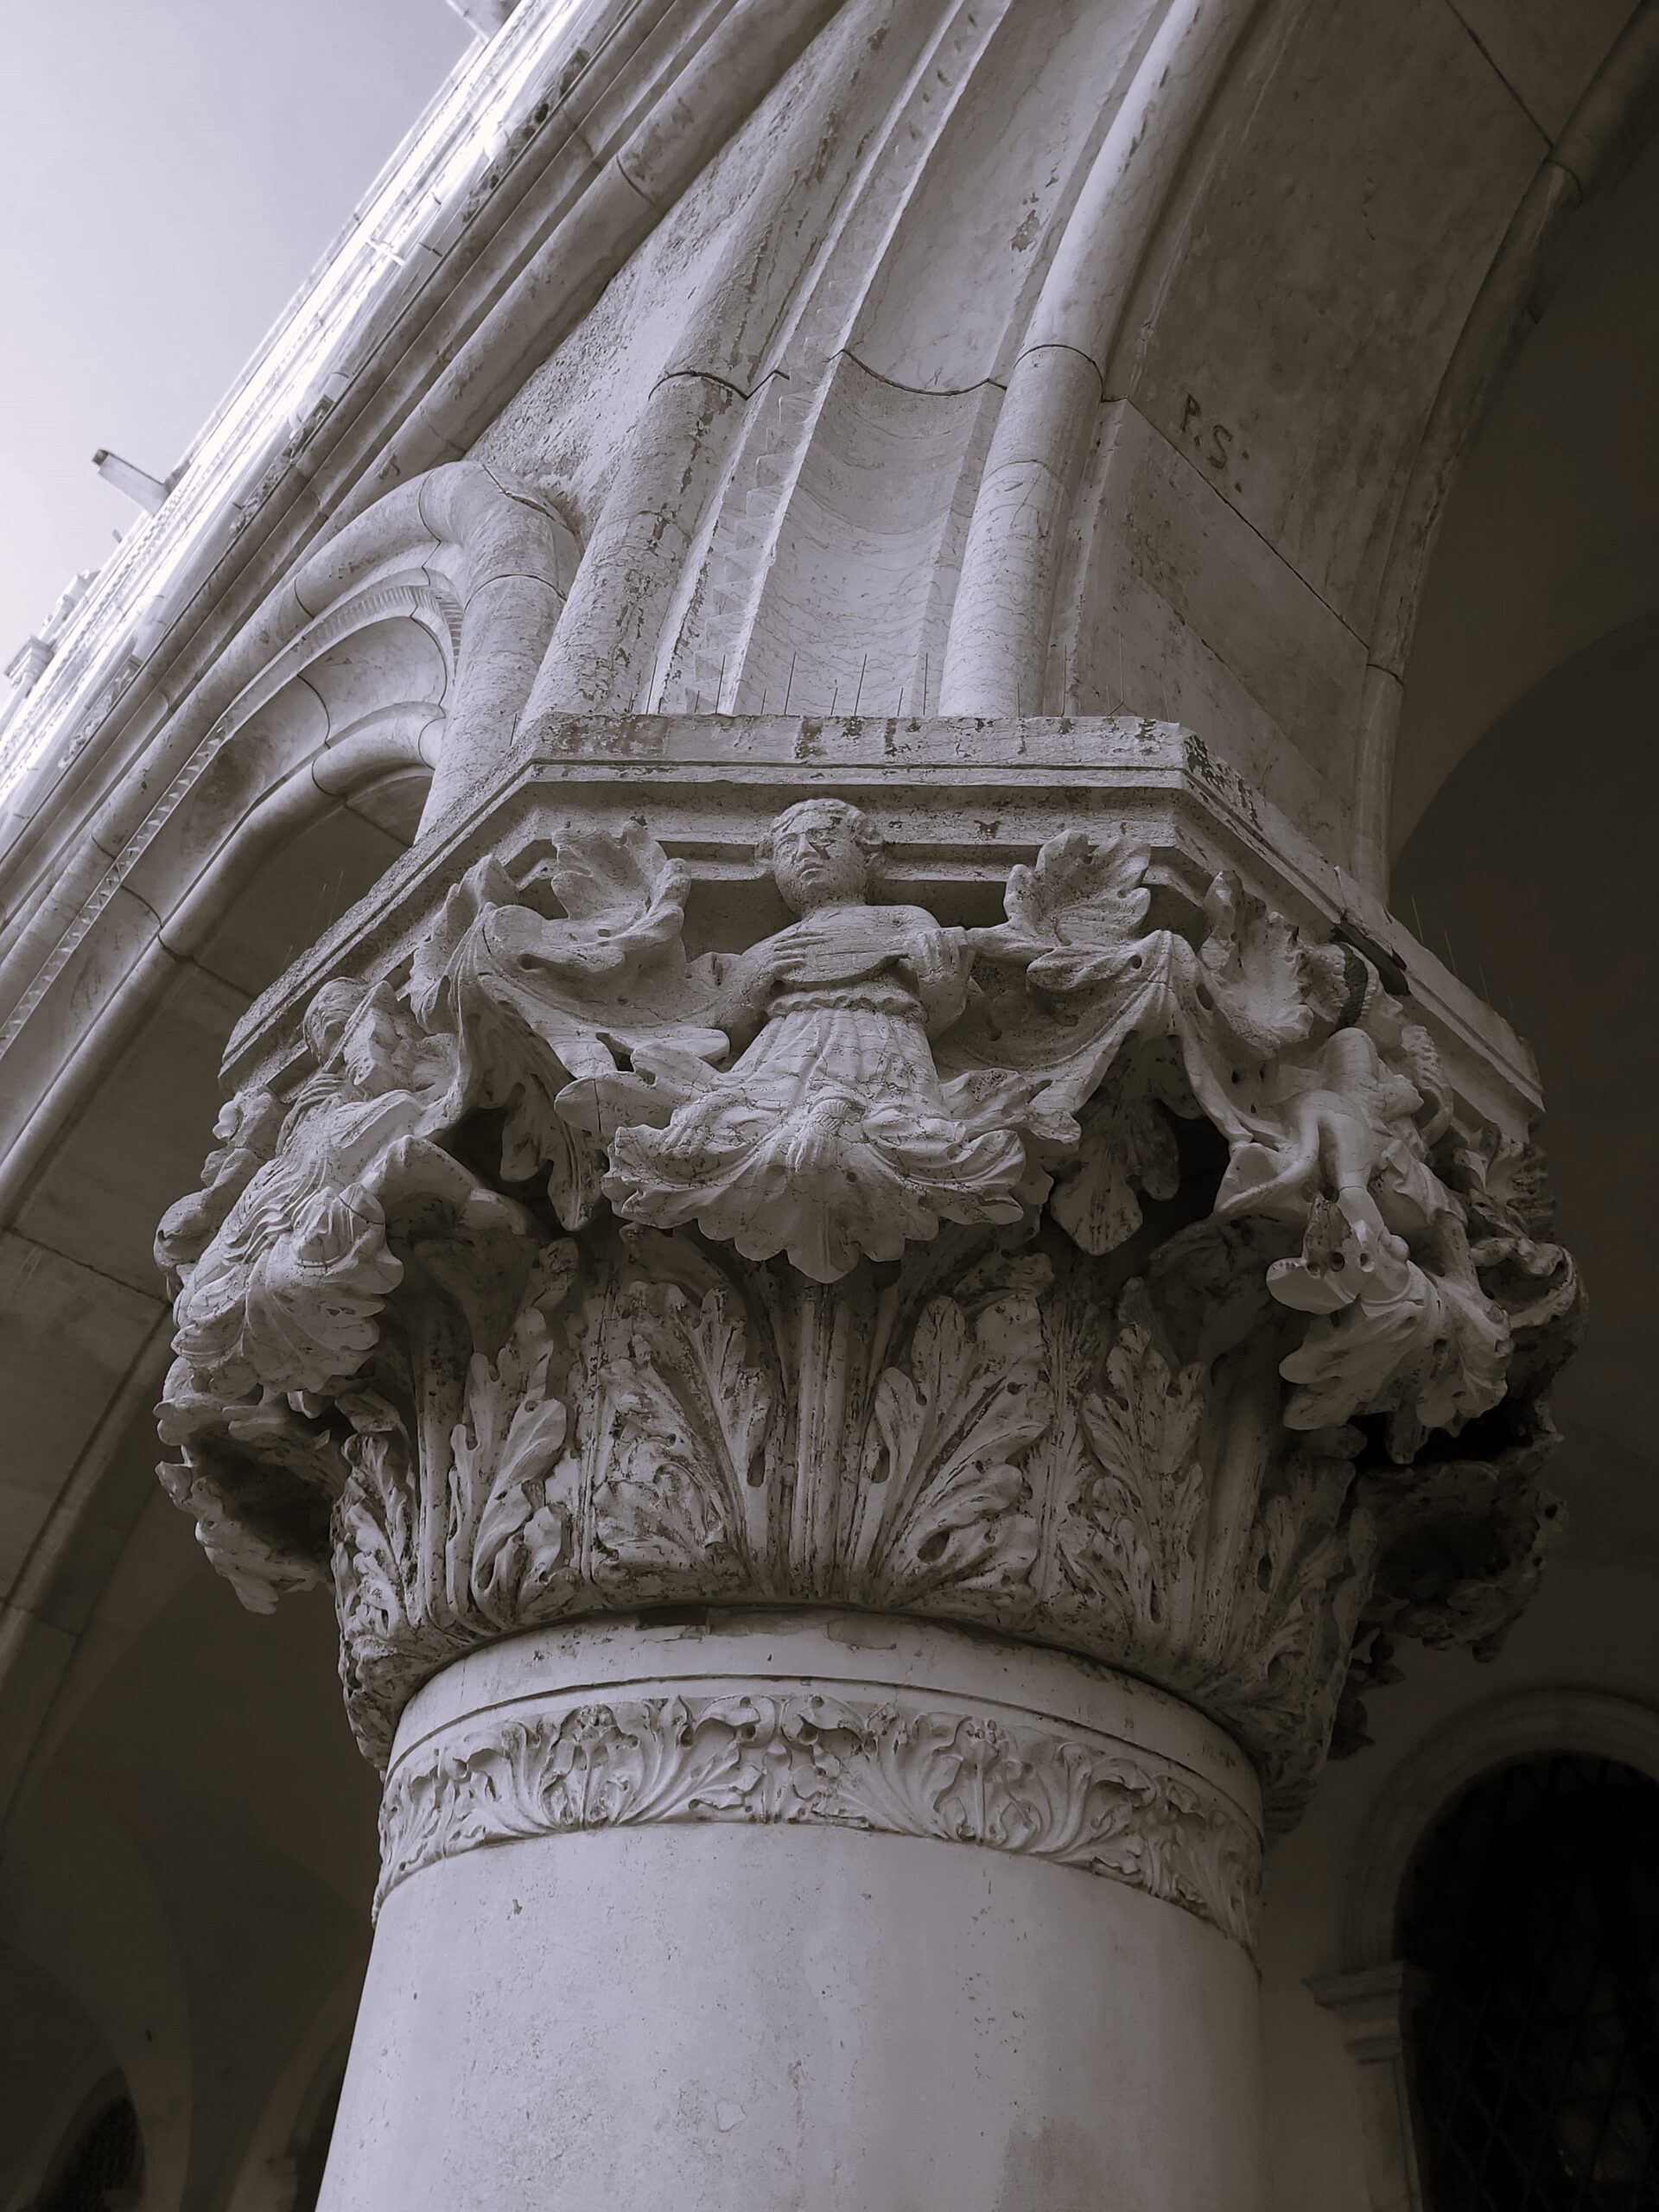 A decorative column in Venice, Italy